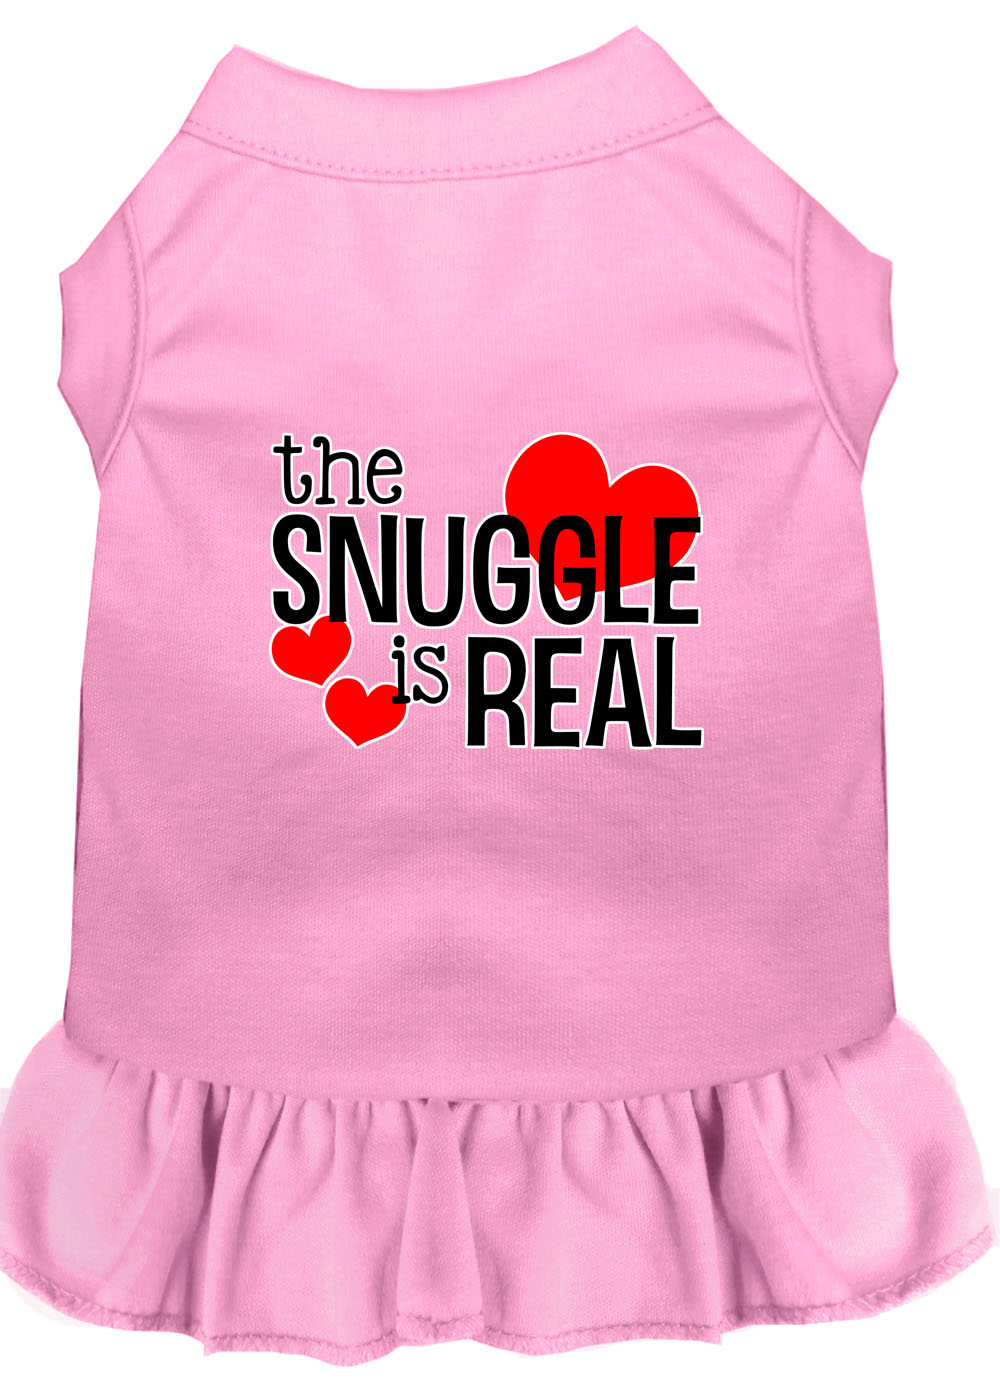 The Snuggle is Real Screen Print Dog Dress Light Pink Lg